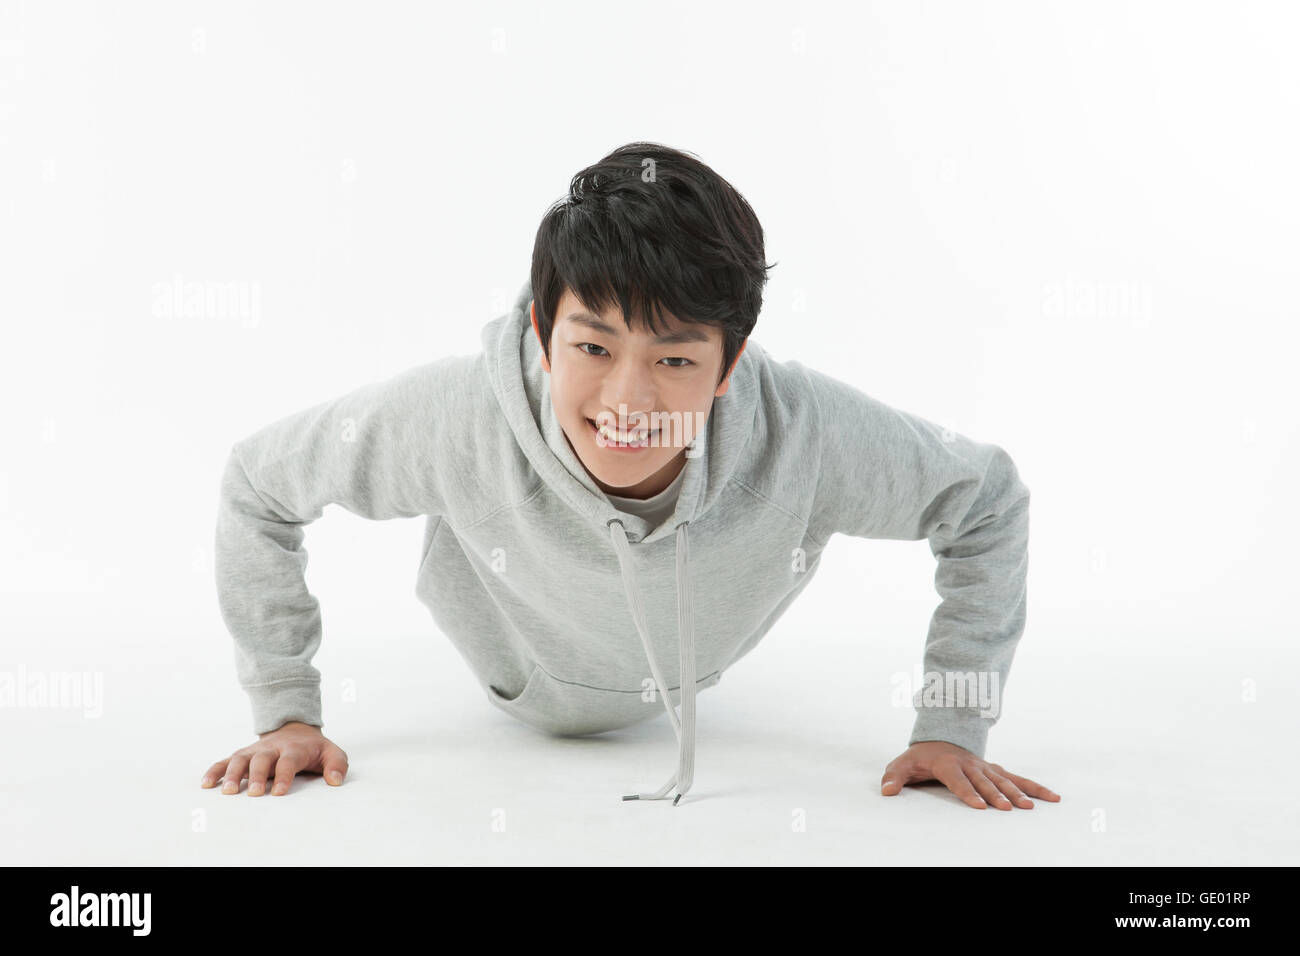 Smiling adolescent boy doing pushups Banque D'Images